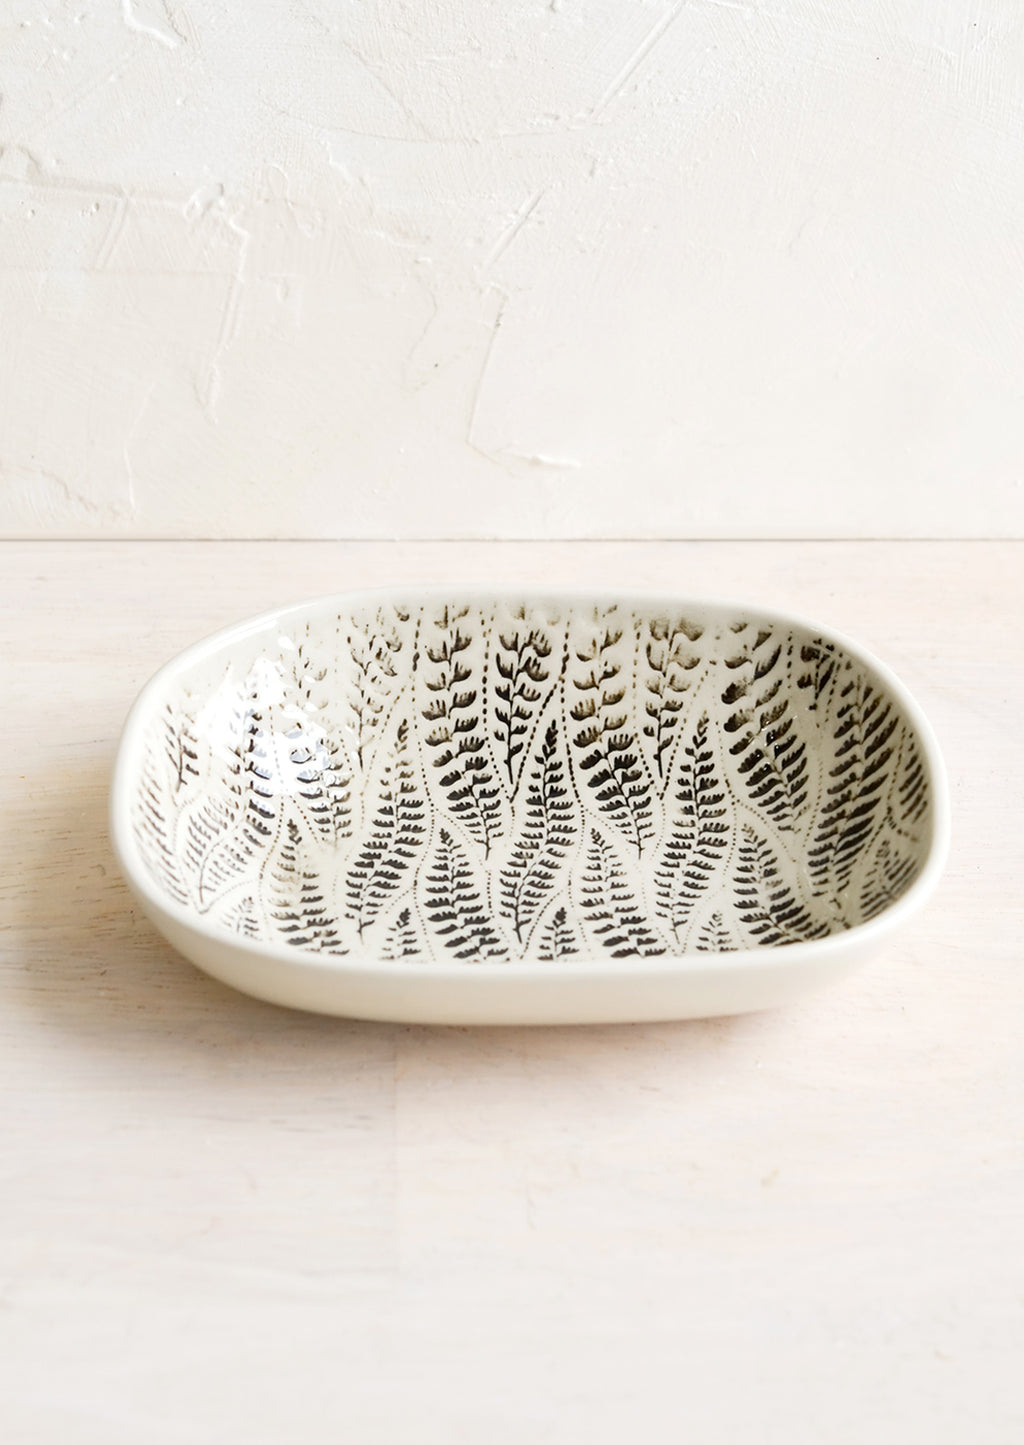 Leaf Print: A small oval ceramic dish in leaf pattern.